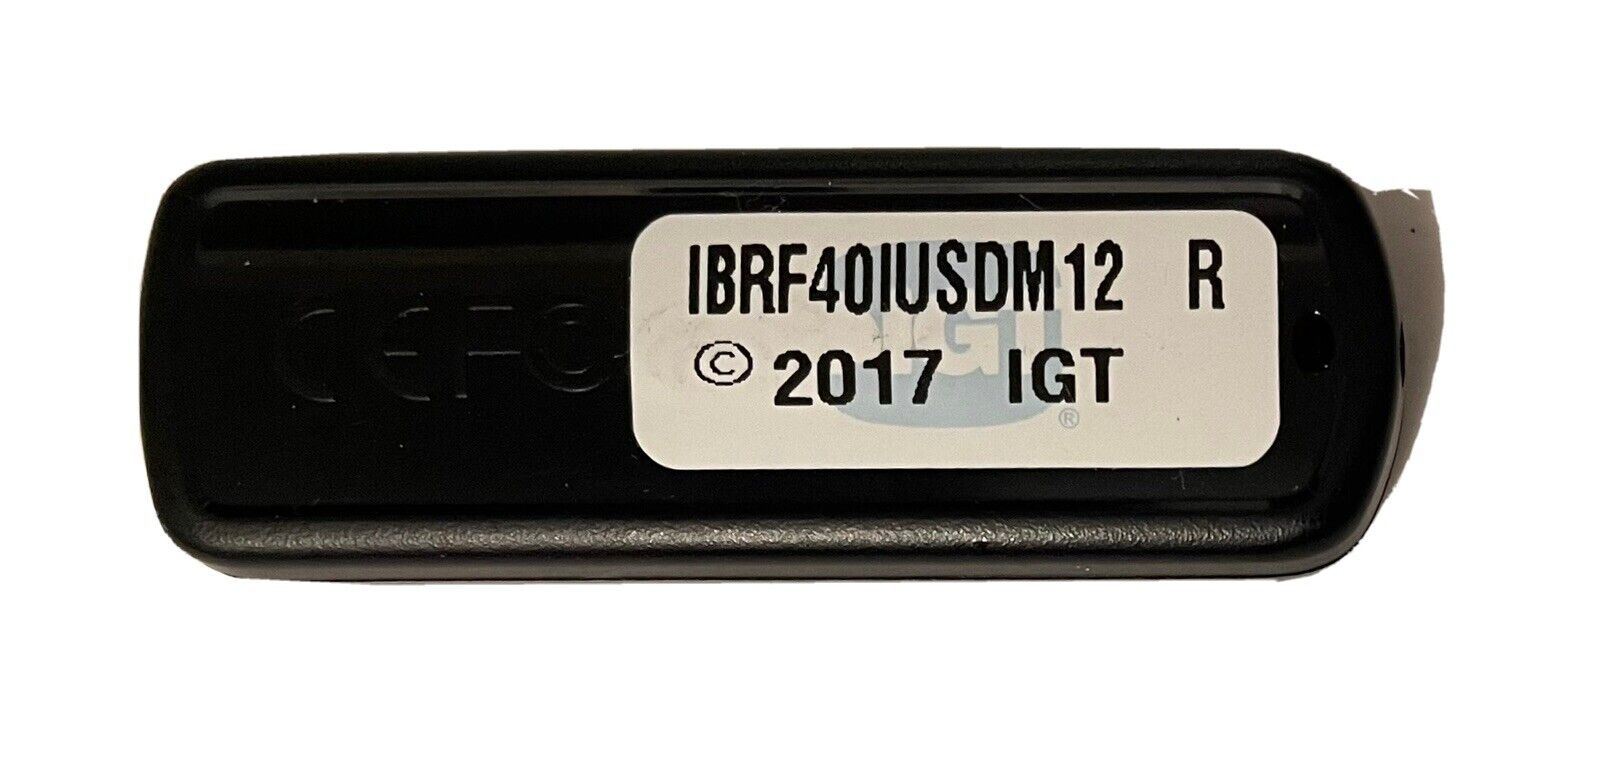 IGT IBRF40IUSDM12 FAMILY 20 SLOT FOUNDATION LOADER AVP 4.0 BIOS S3000